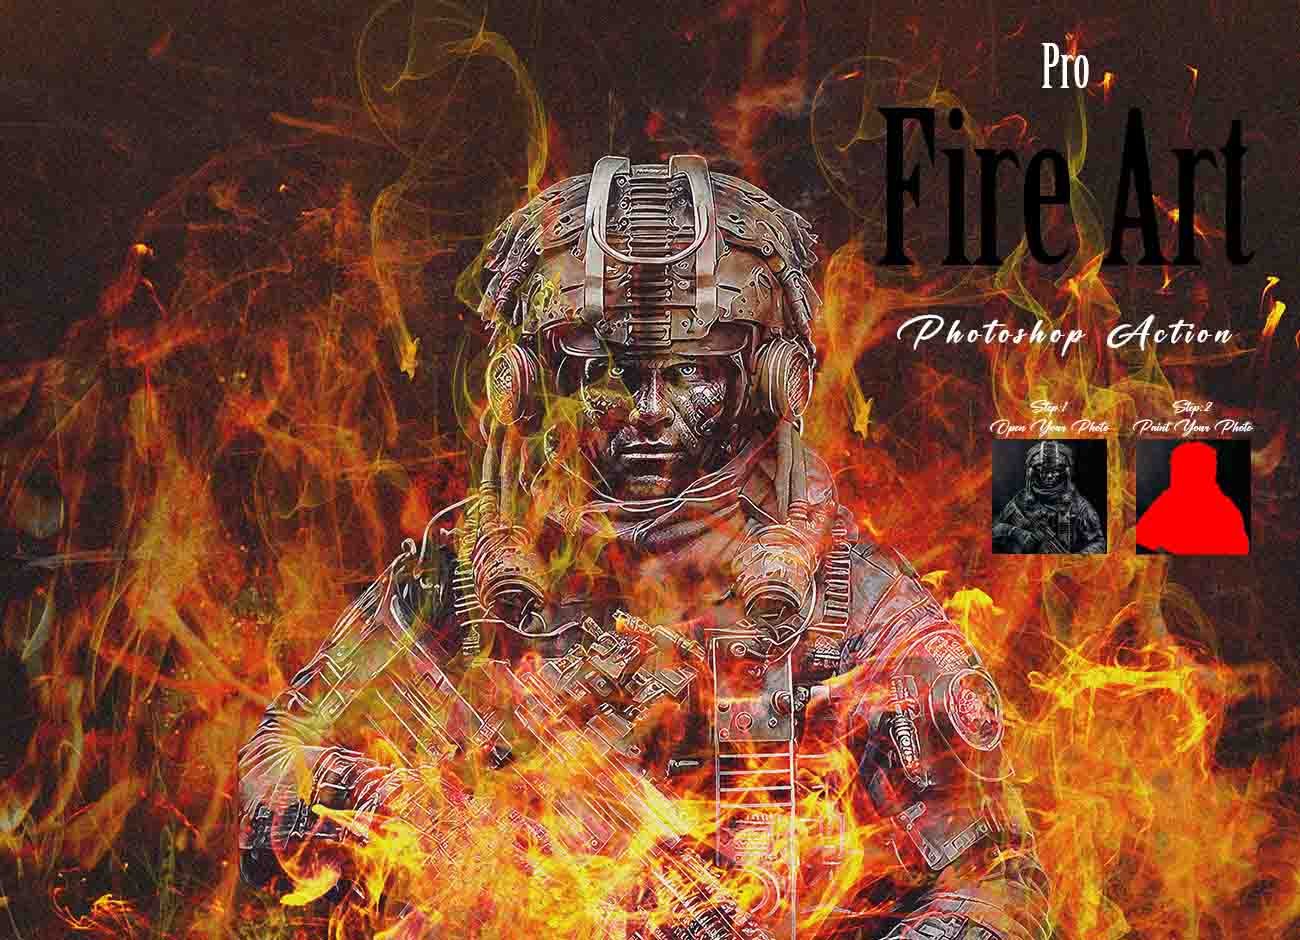 Pro Fire Art Photoshop Actioncover image.